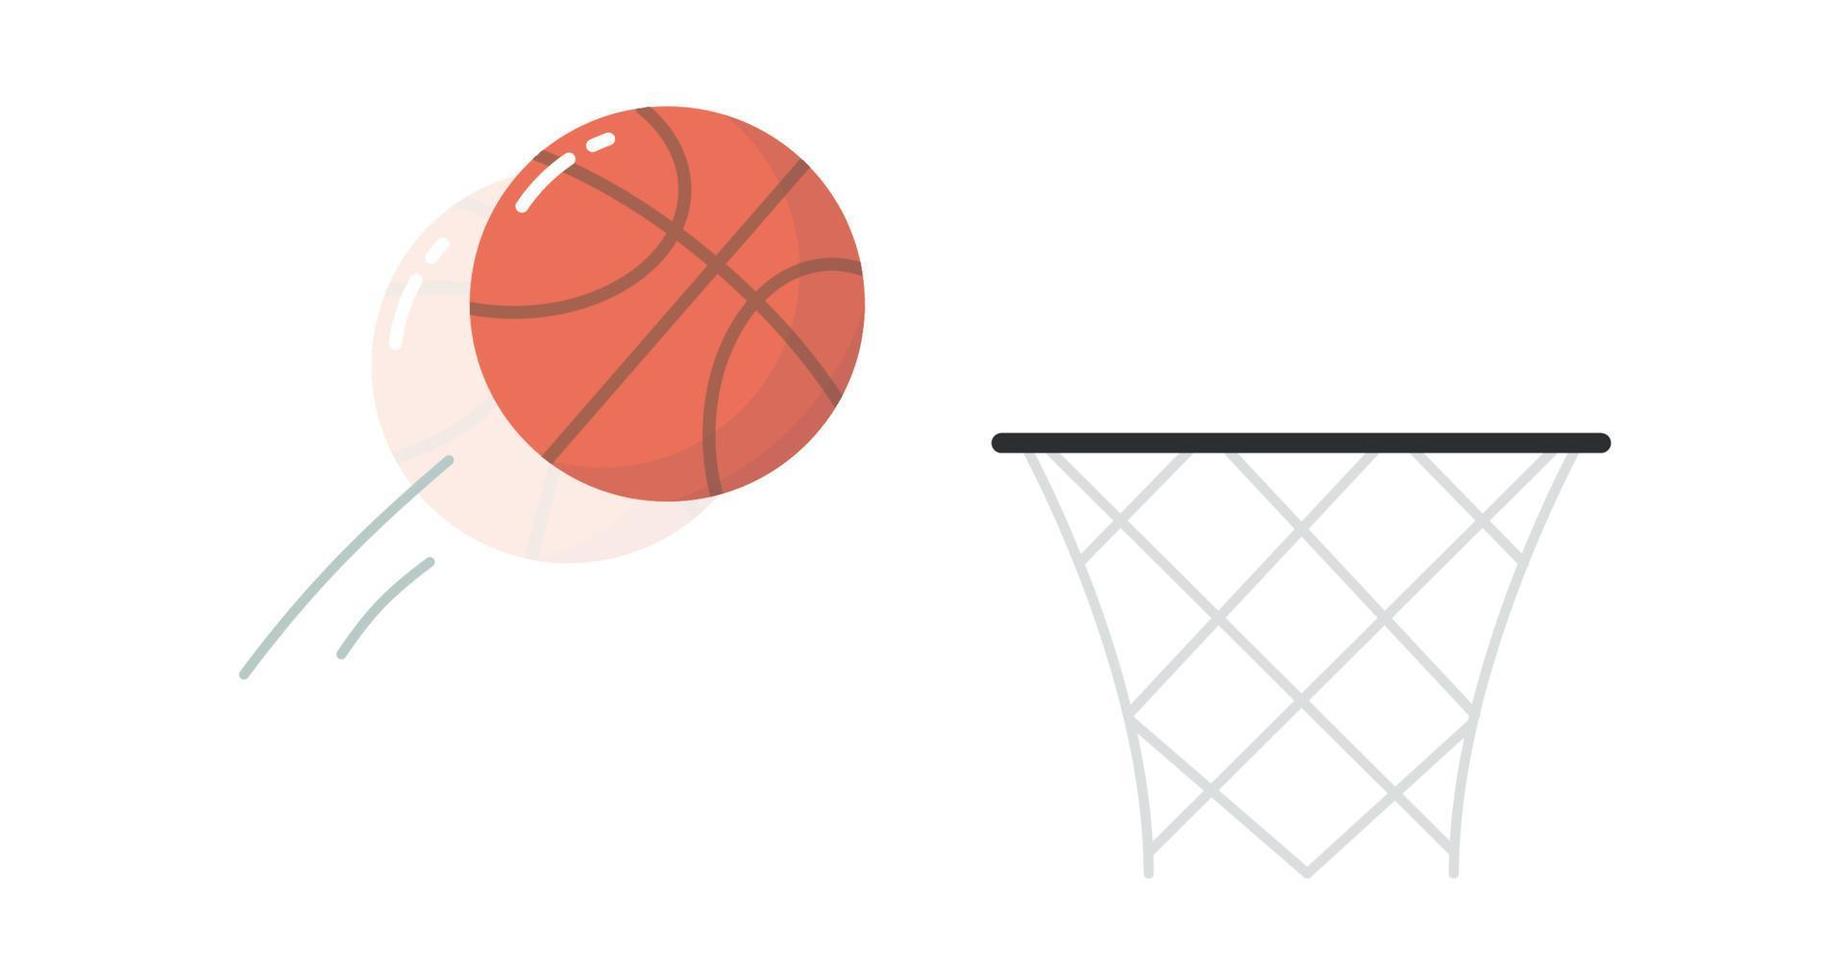 Basketball-Ball-Symbol und runde orangefarbene Sportgeräte professionelles Spiel flache Vektorillustration. vektor